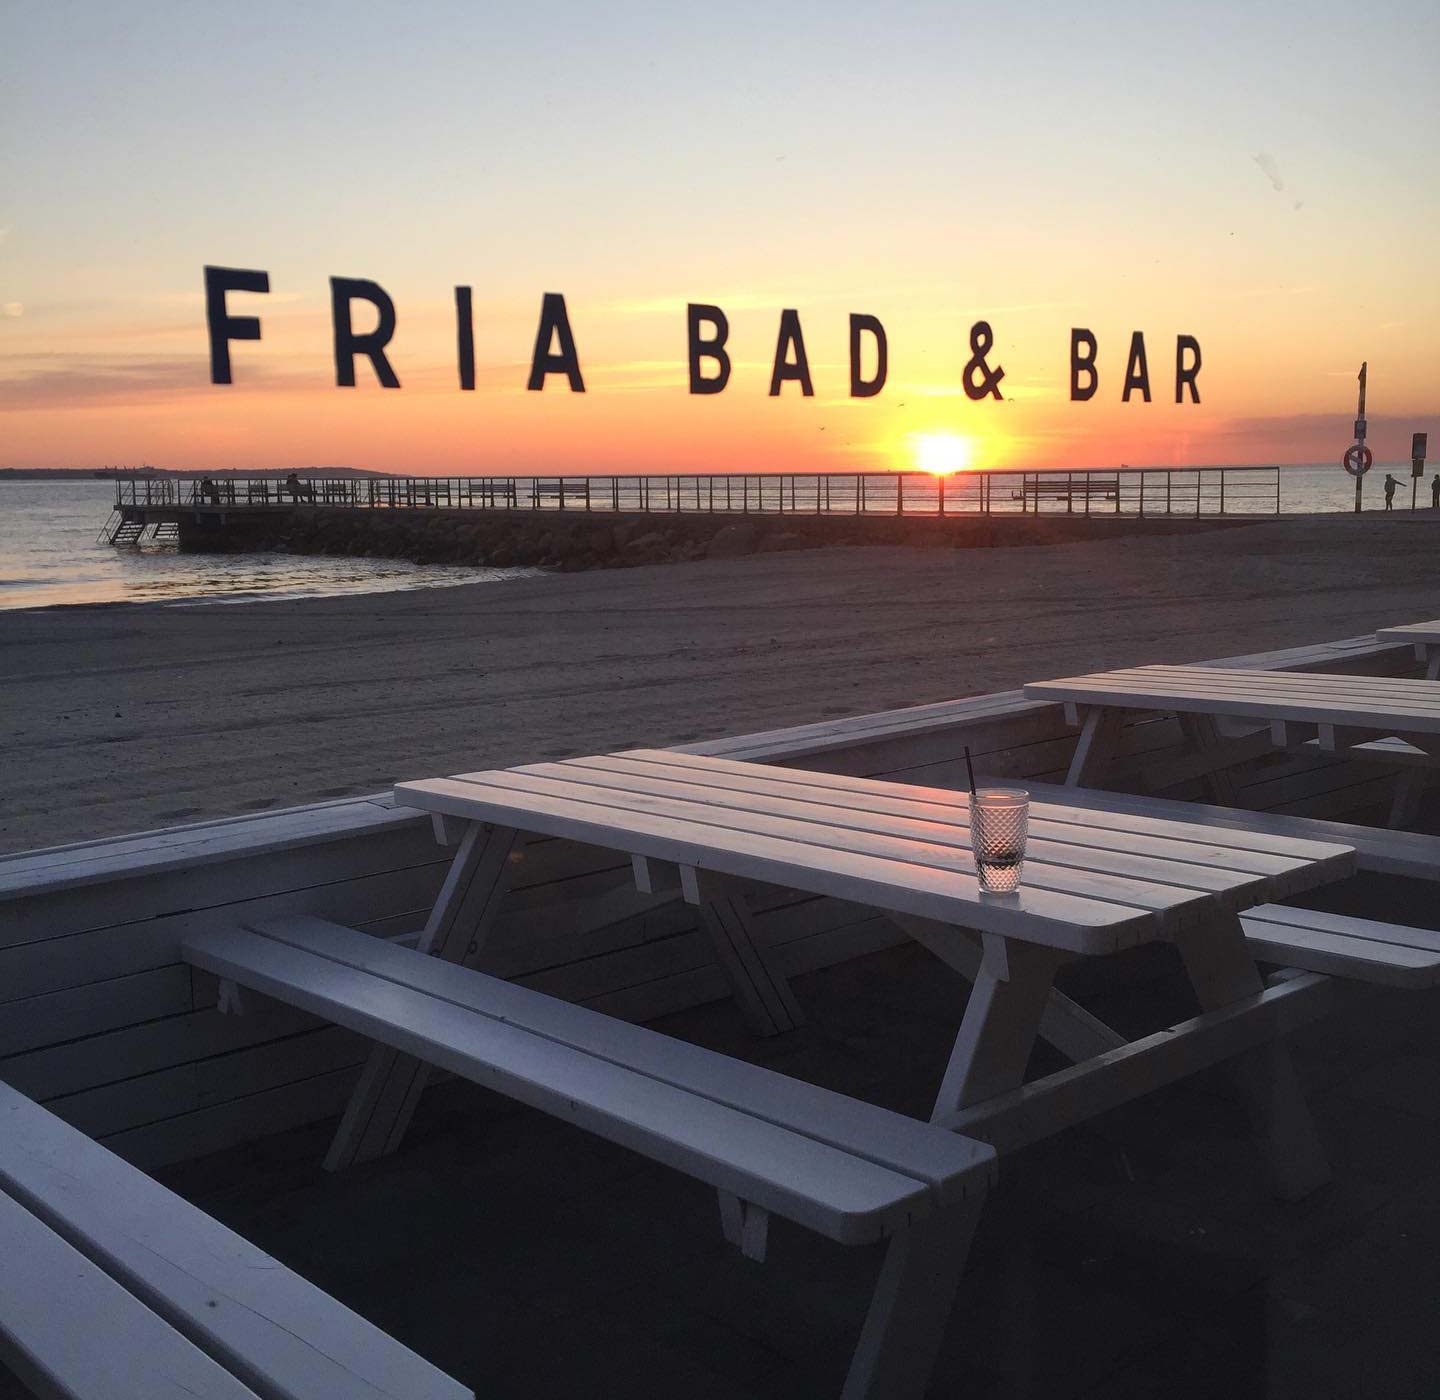 Fria Bad & Bar